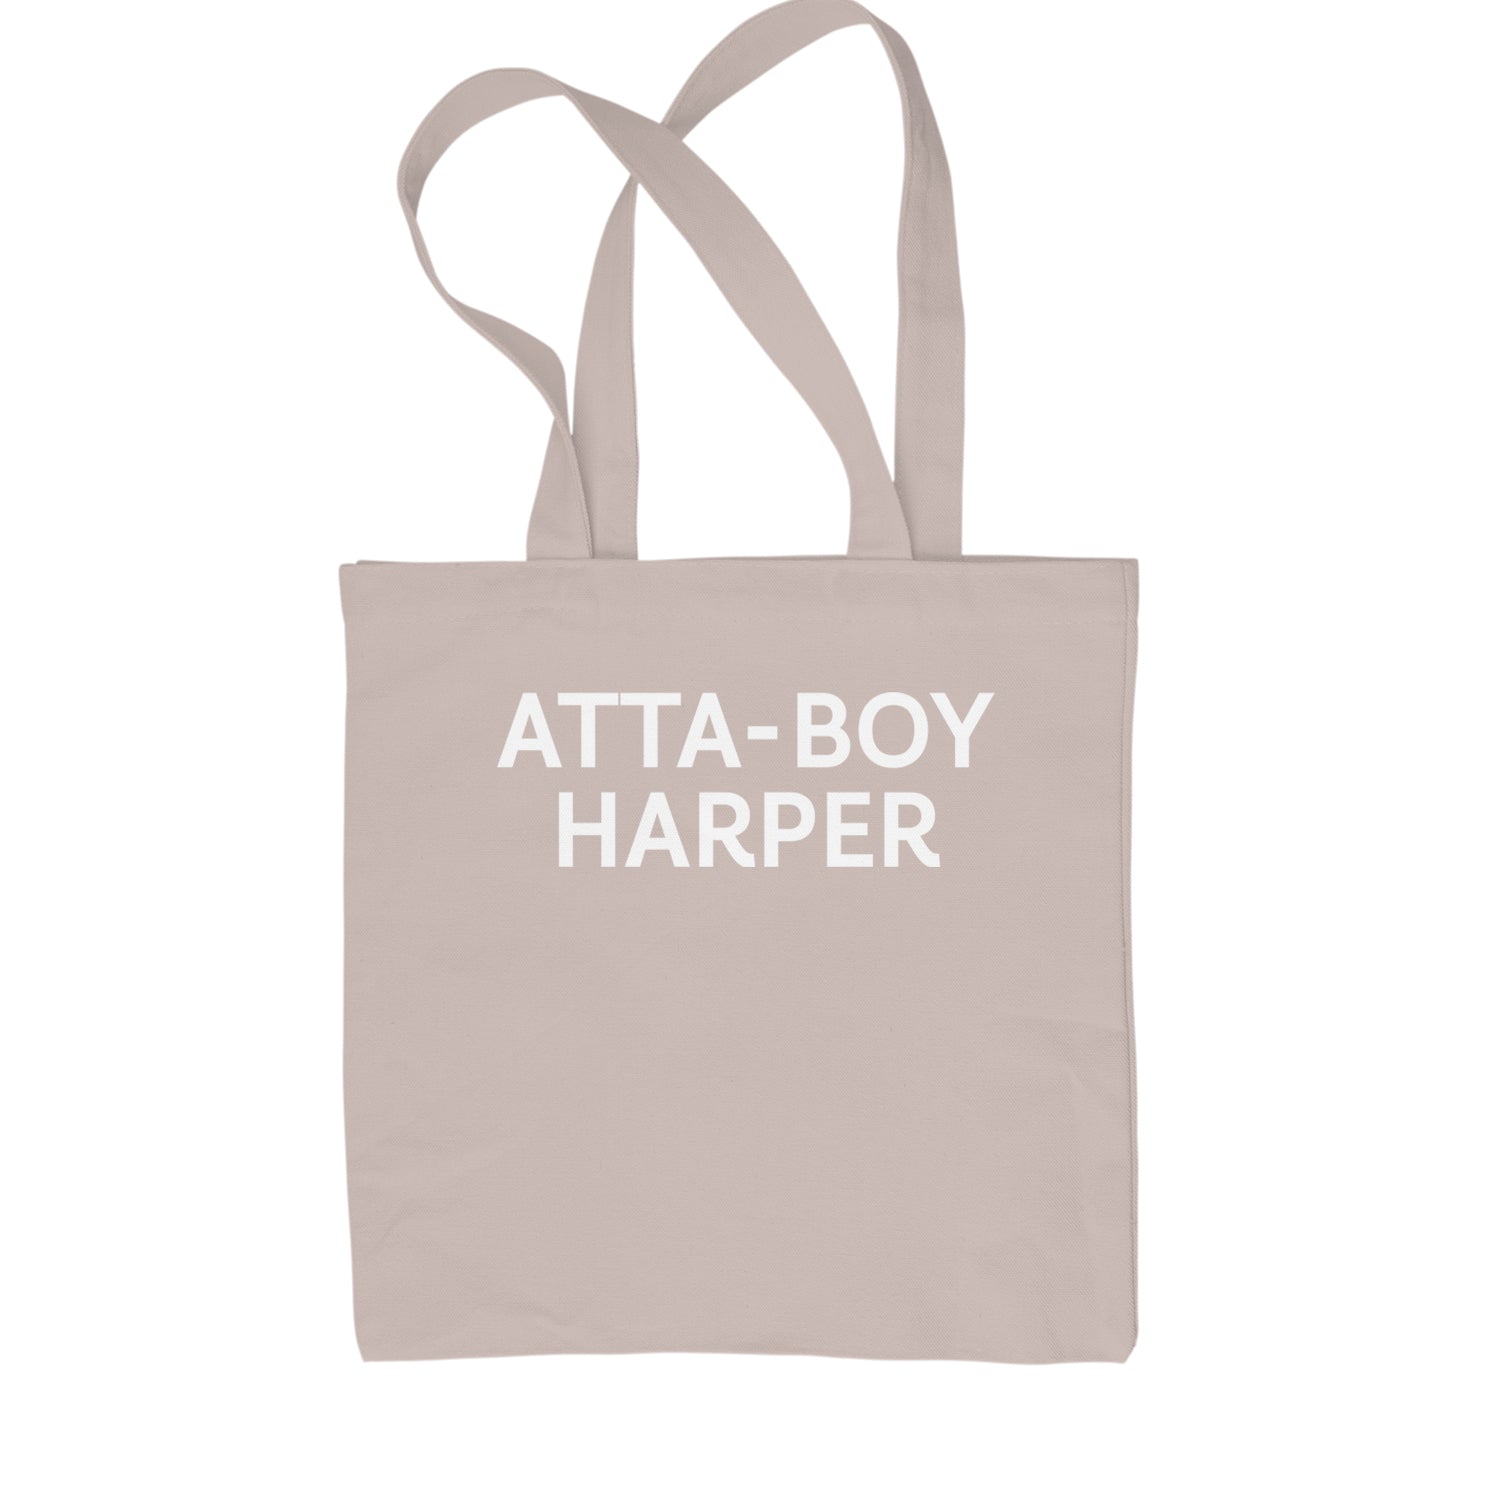 Atta-Boy Harper Philadelphia Shopping Tote Bag Natural